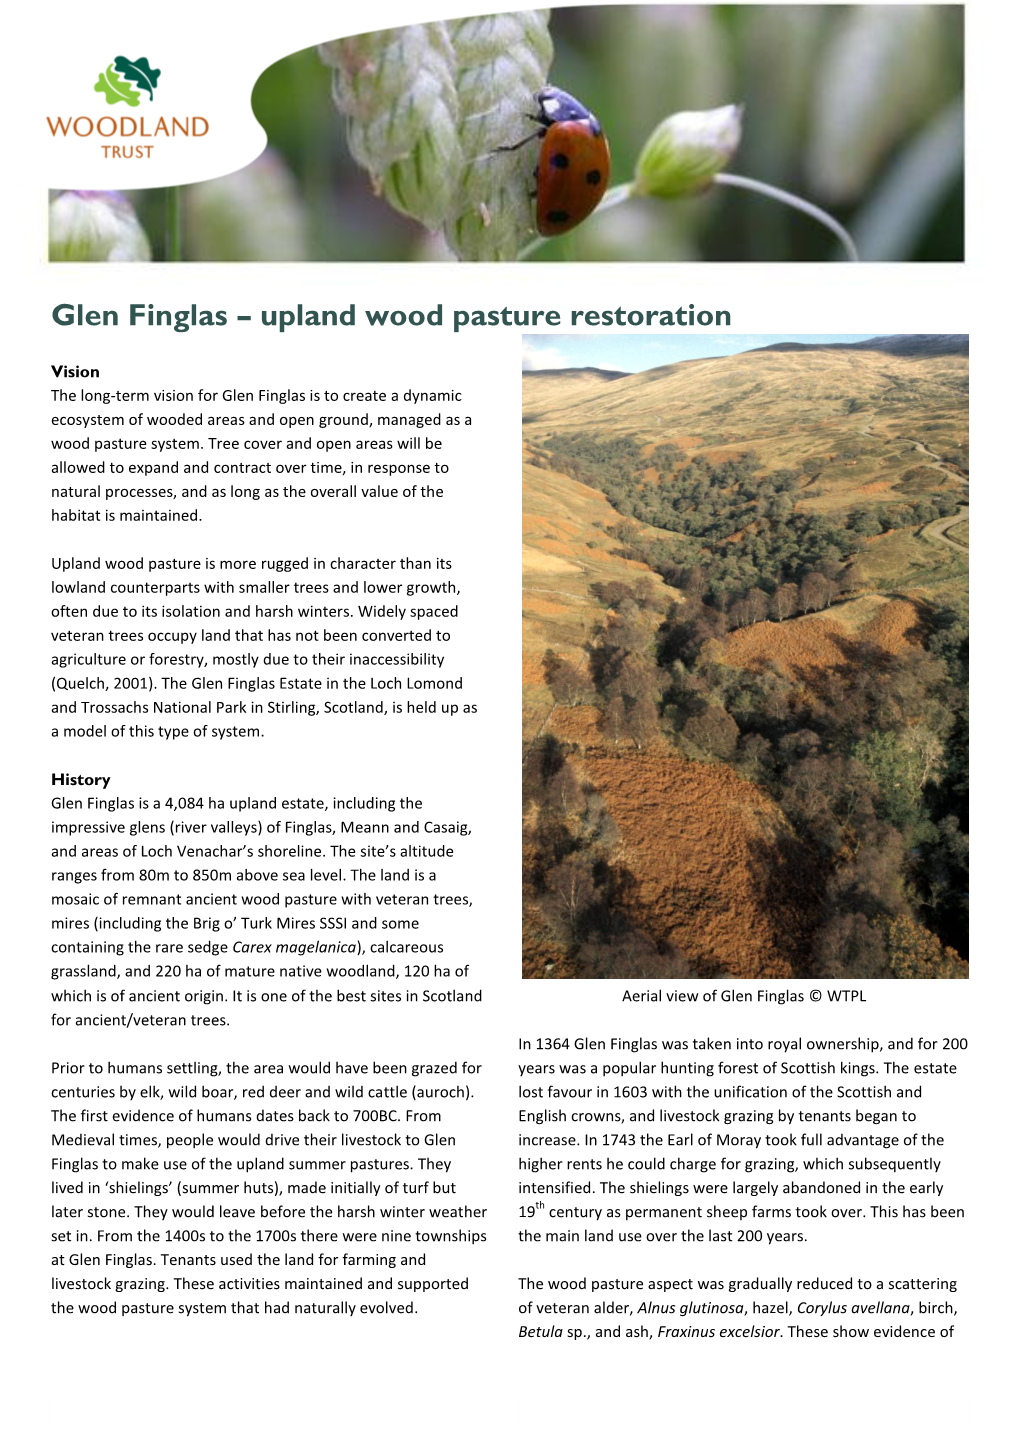 Glen Finglas – Upland Wood Pasture Restoration